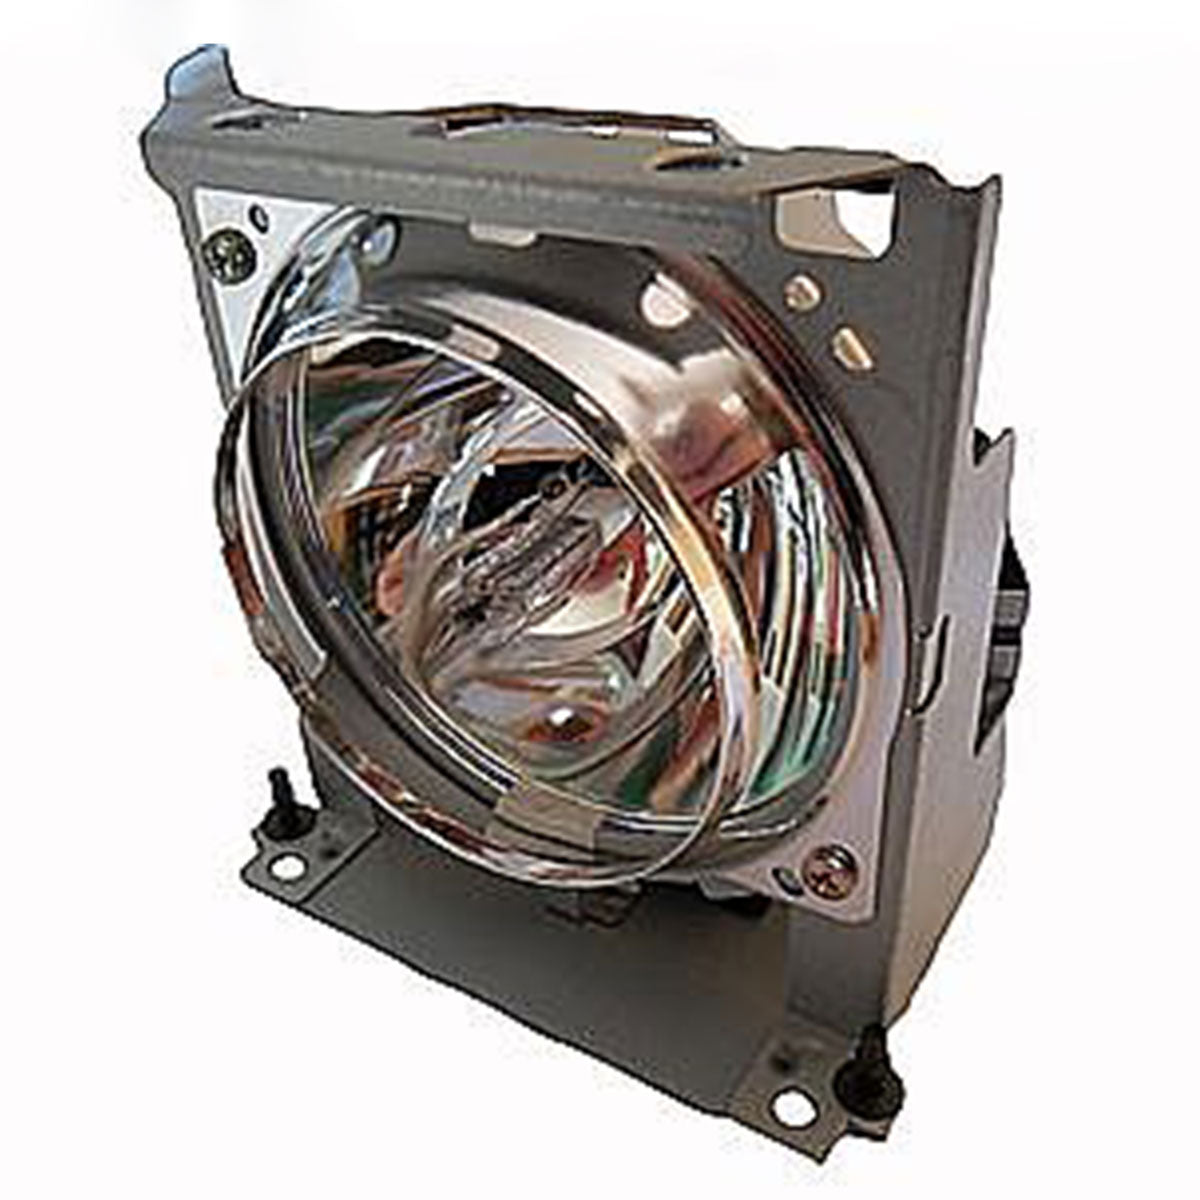 Hitachi CPL850Lamp Compatible Projector Lamp Module